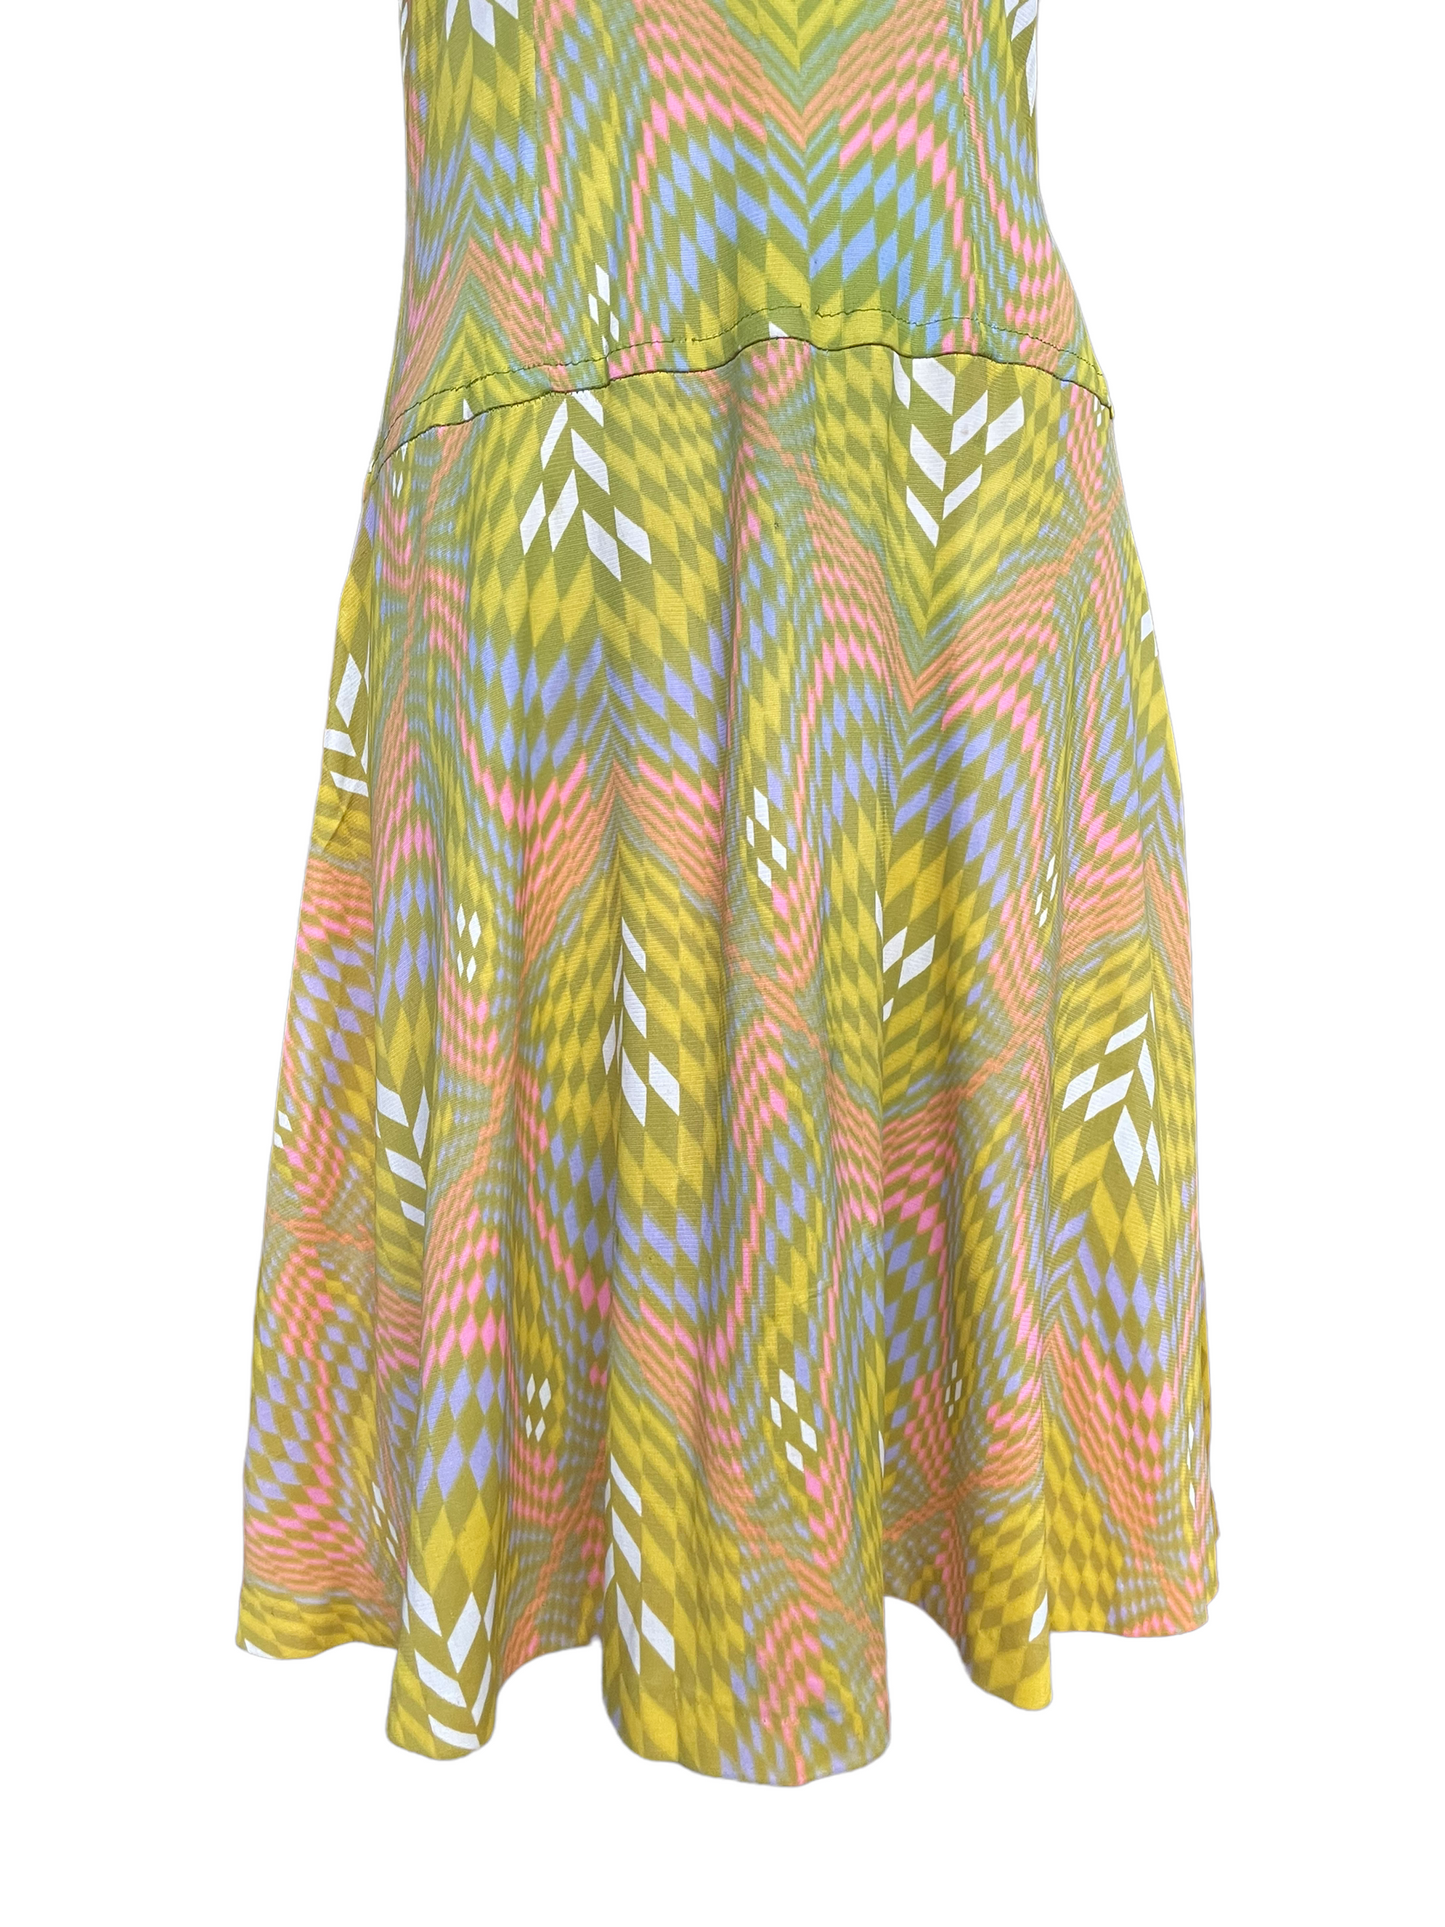 Front skirt view of Vintage 1960s Geometric Pattern Dress SZ M | Seattle Vintage Dresses | Barn Owl Vintage